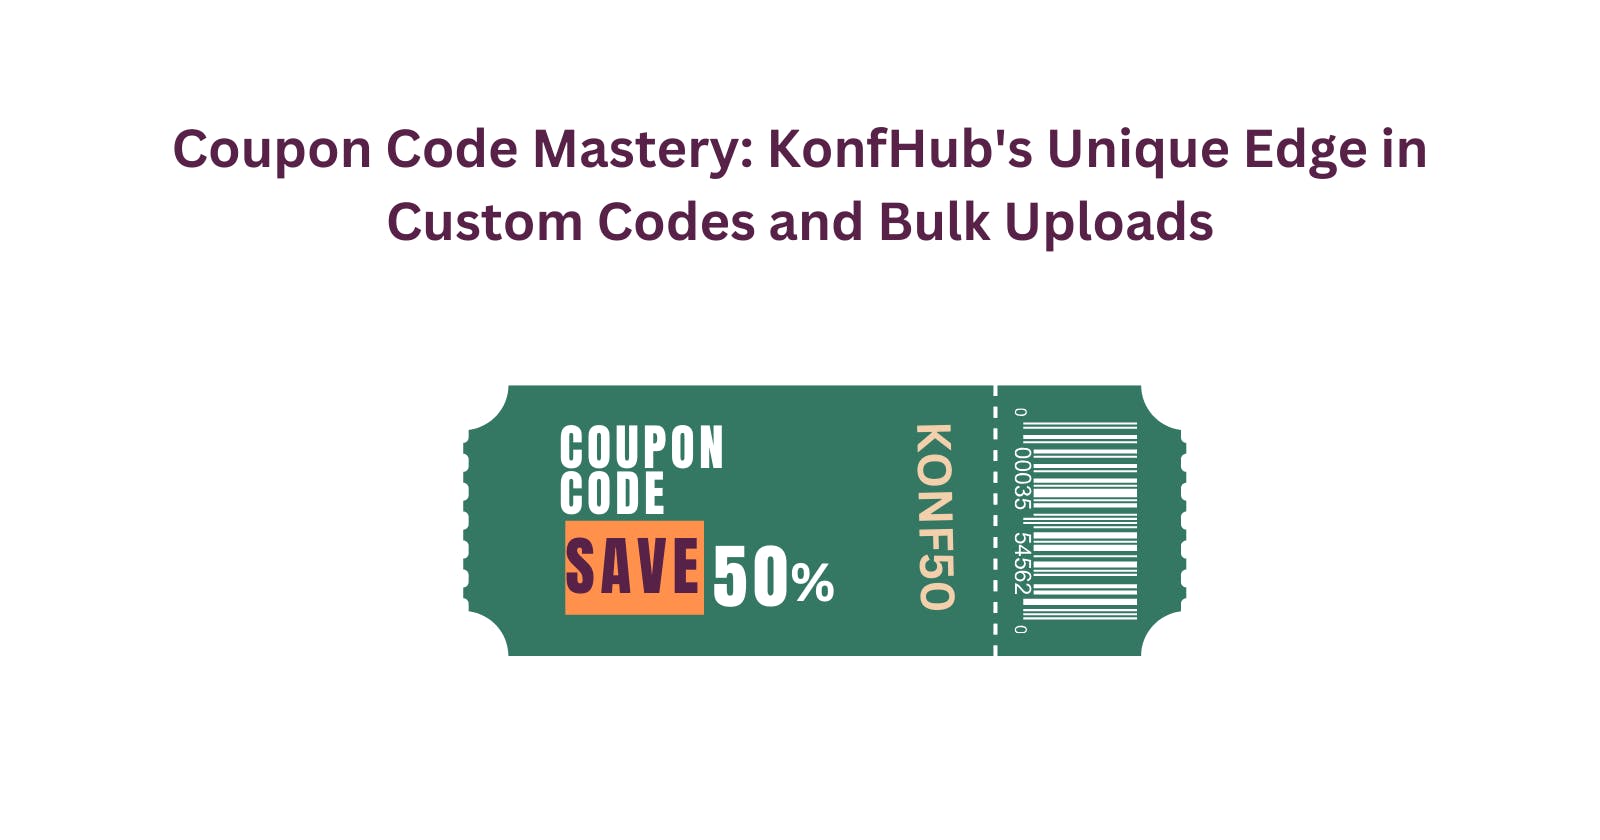 Coupon Code Mastery: KonfHub's Unique Edge in Custom Codes and Bulk Uploads